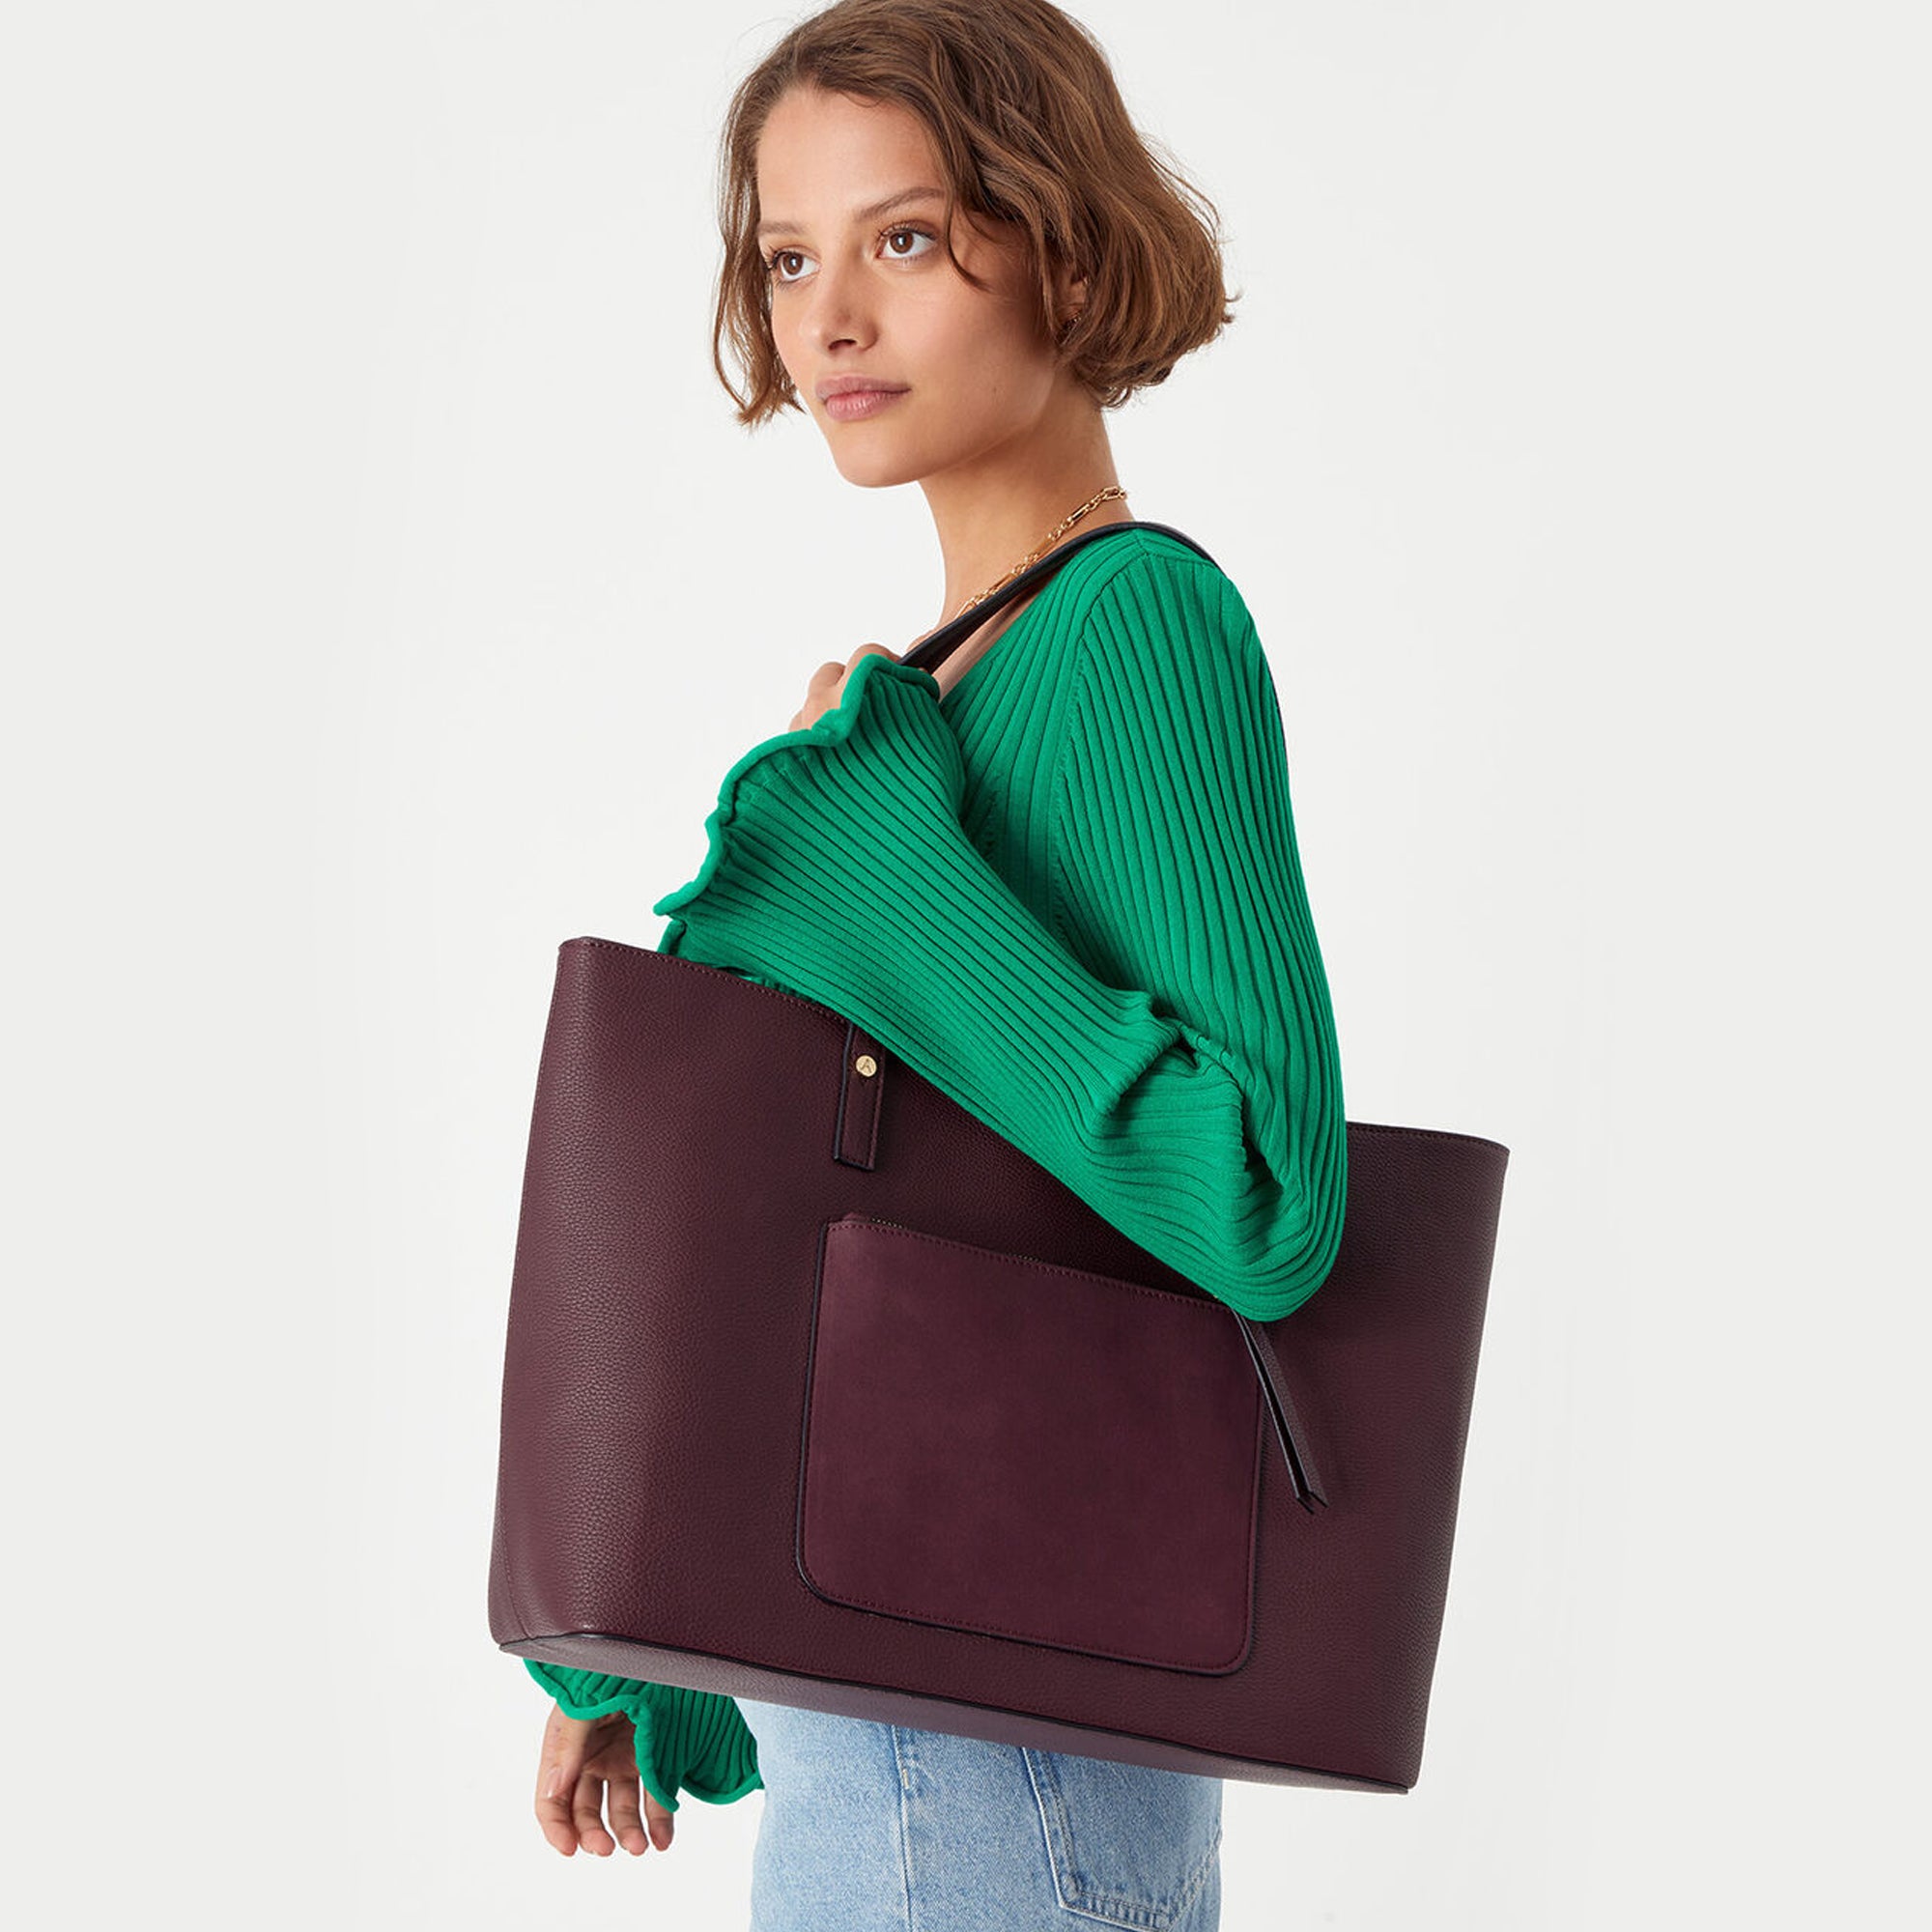 Accessorize London Women's Faux Leather Burgundy Eleanor Tote Bag